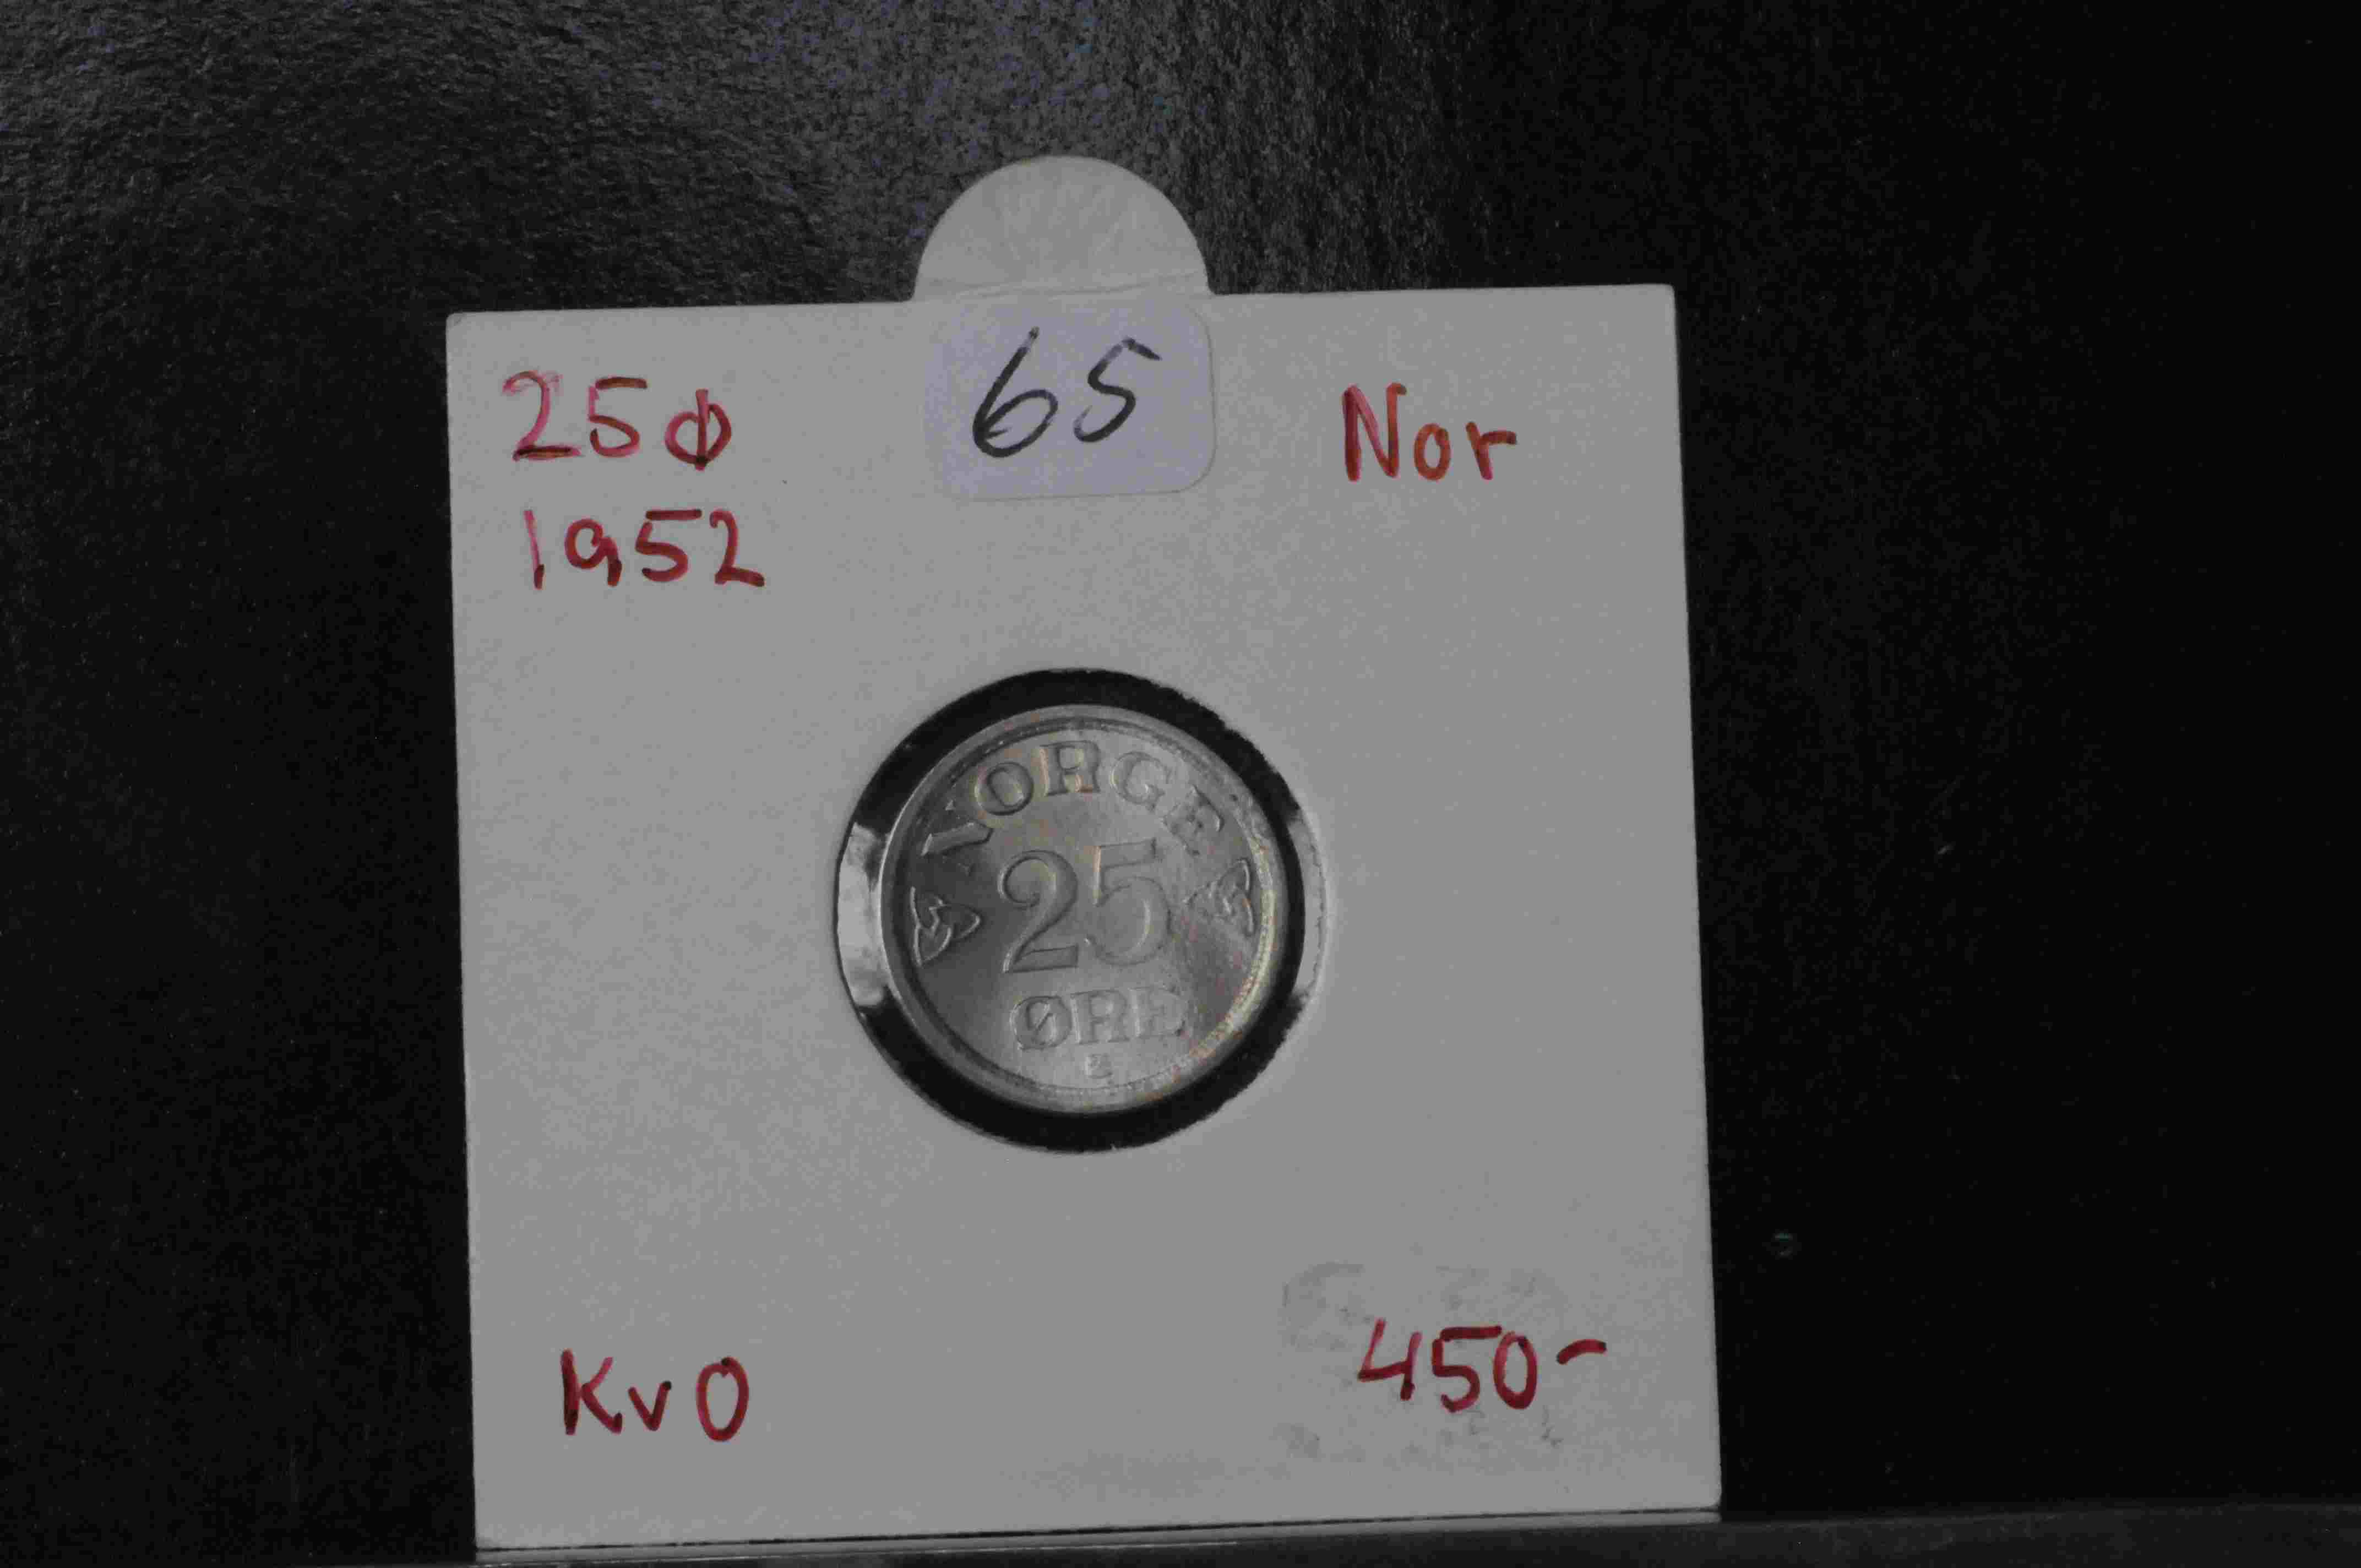 25ø 1952 kv0